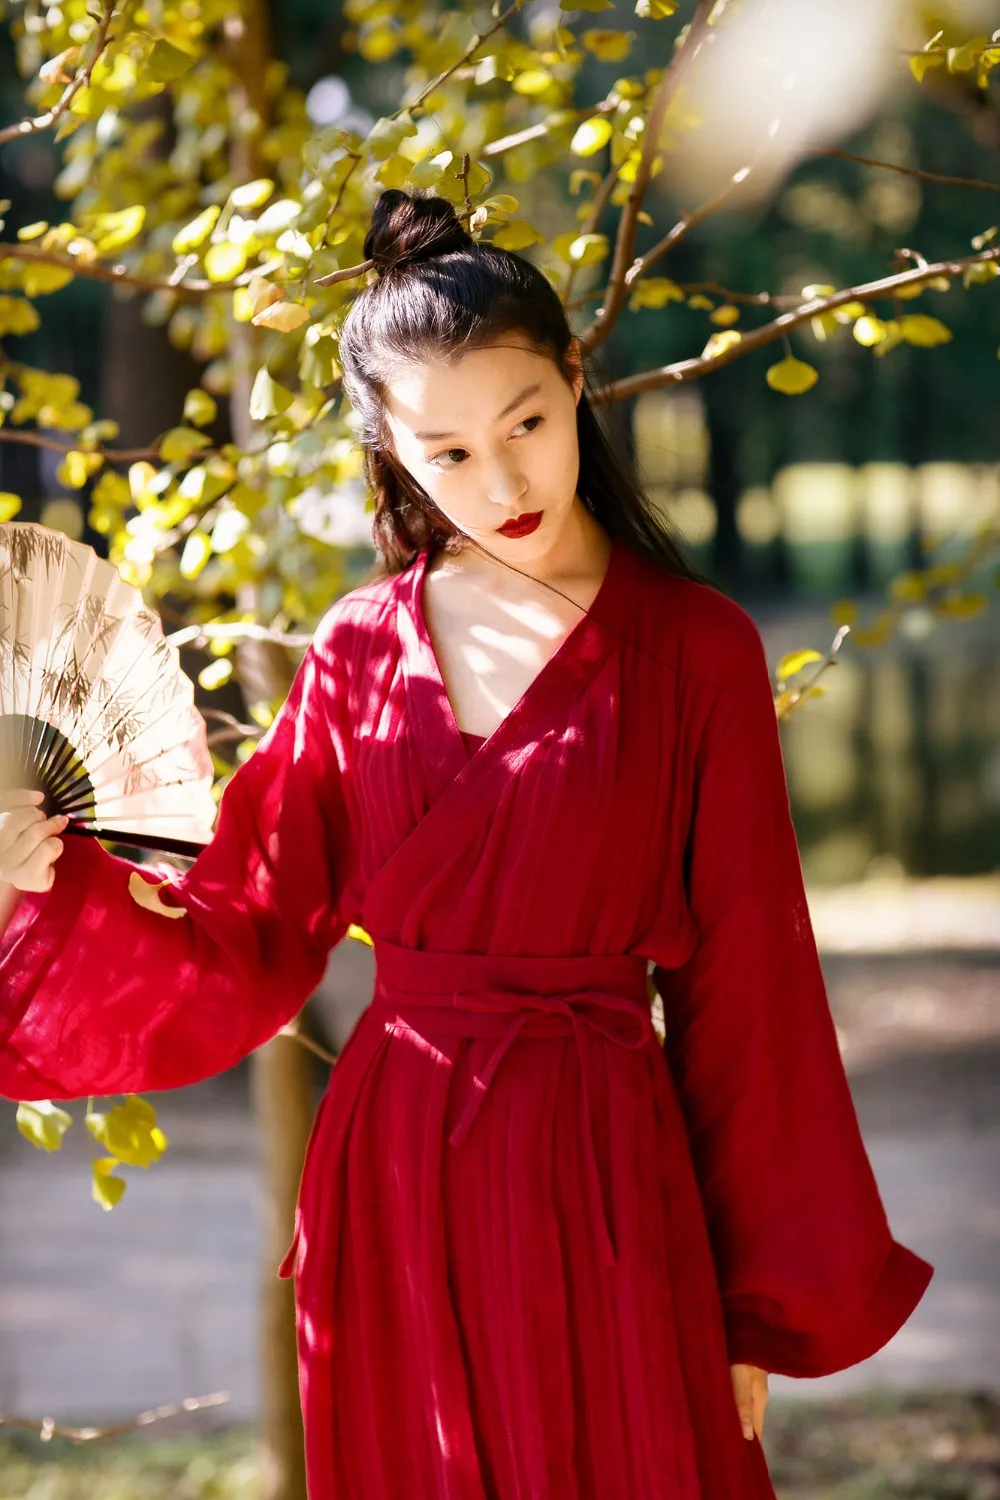 LYNETTE CHINOISERIE Primavara Toamna Design Original Femei Chineză Stil Vintage Lenjerie de Rochii Roșii